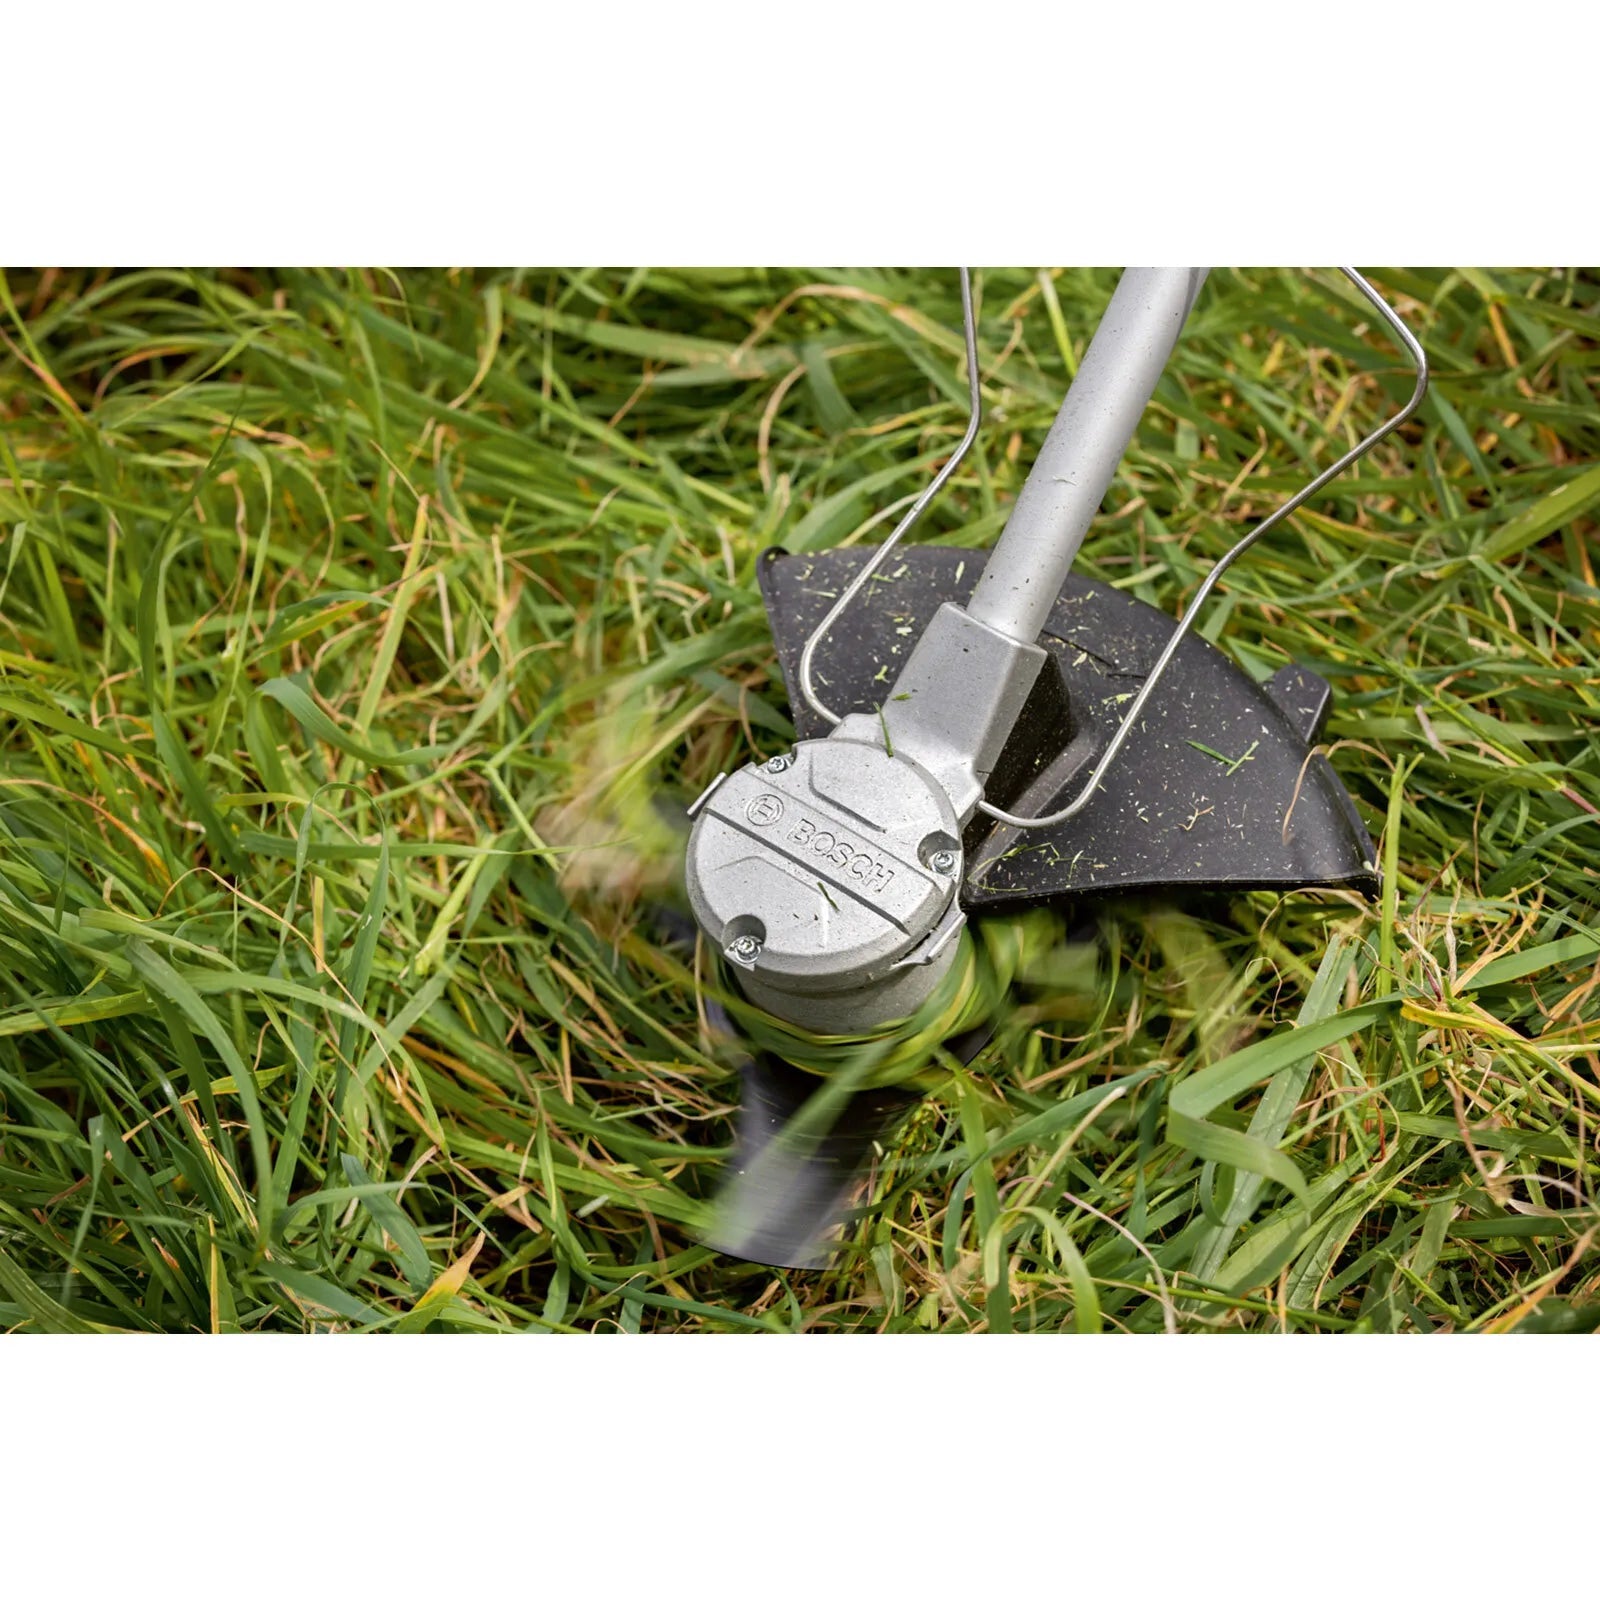 Bosch Professional Cordless Grass Trimmer GFR 18V-23 06008D1000 Power Tool Services